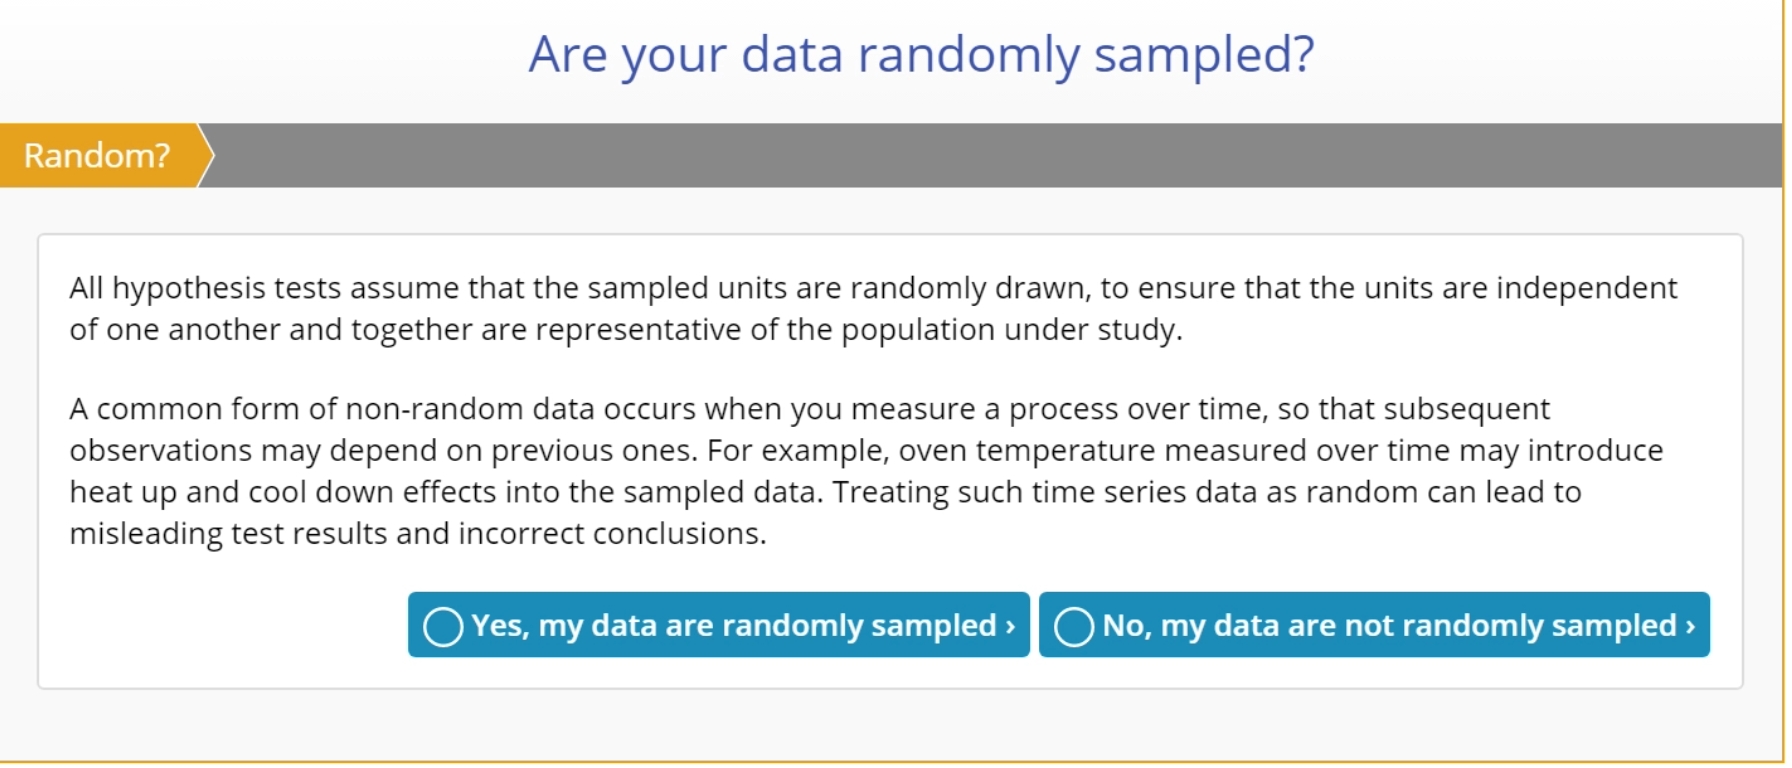 Pop-up asking if data are randomly sampled.